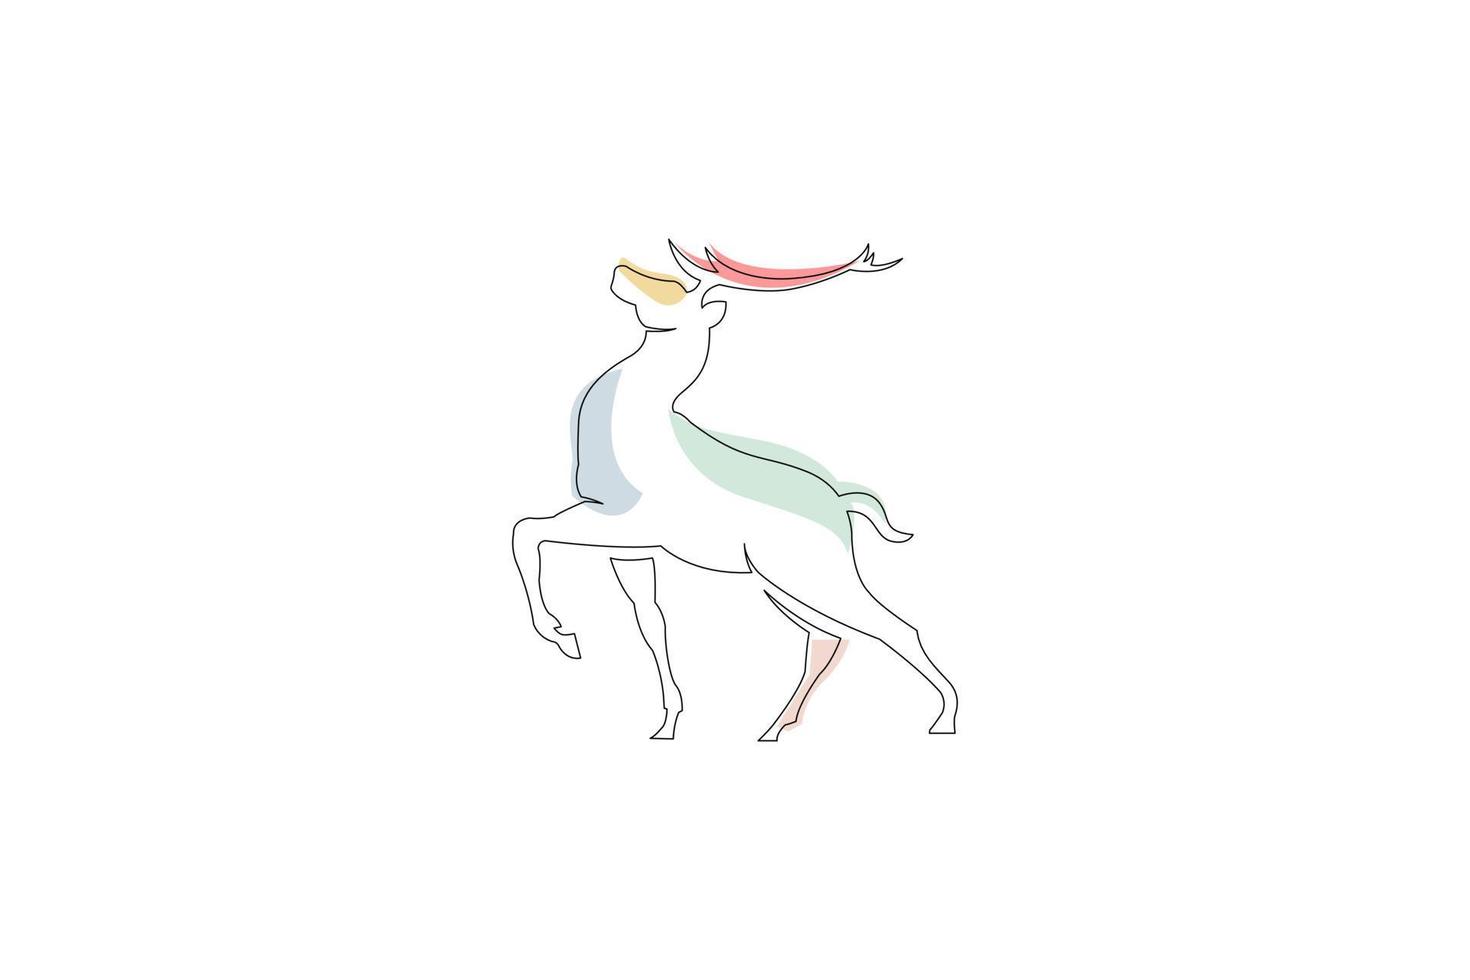 Deer Monoline Line Art Logo Vector Icon Illustration